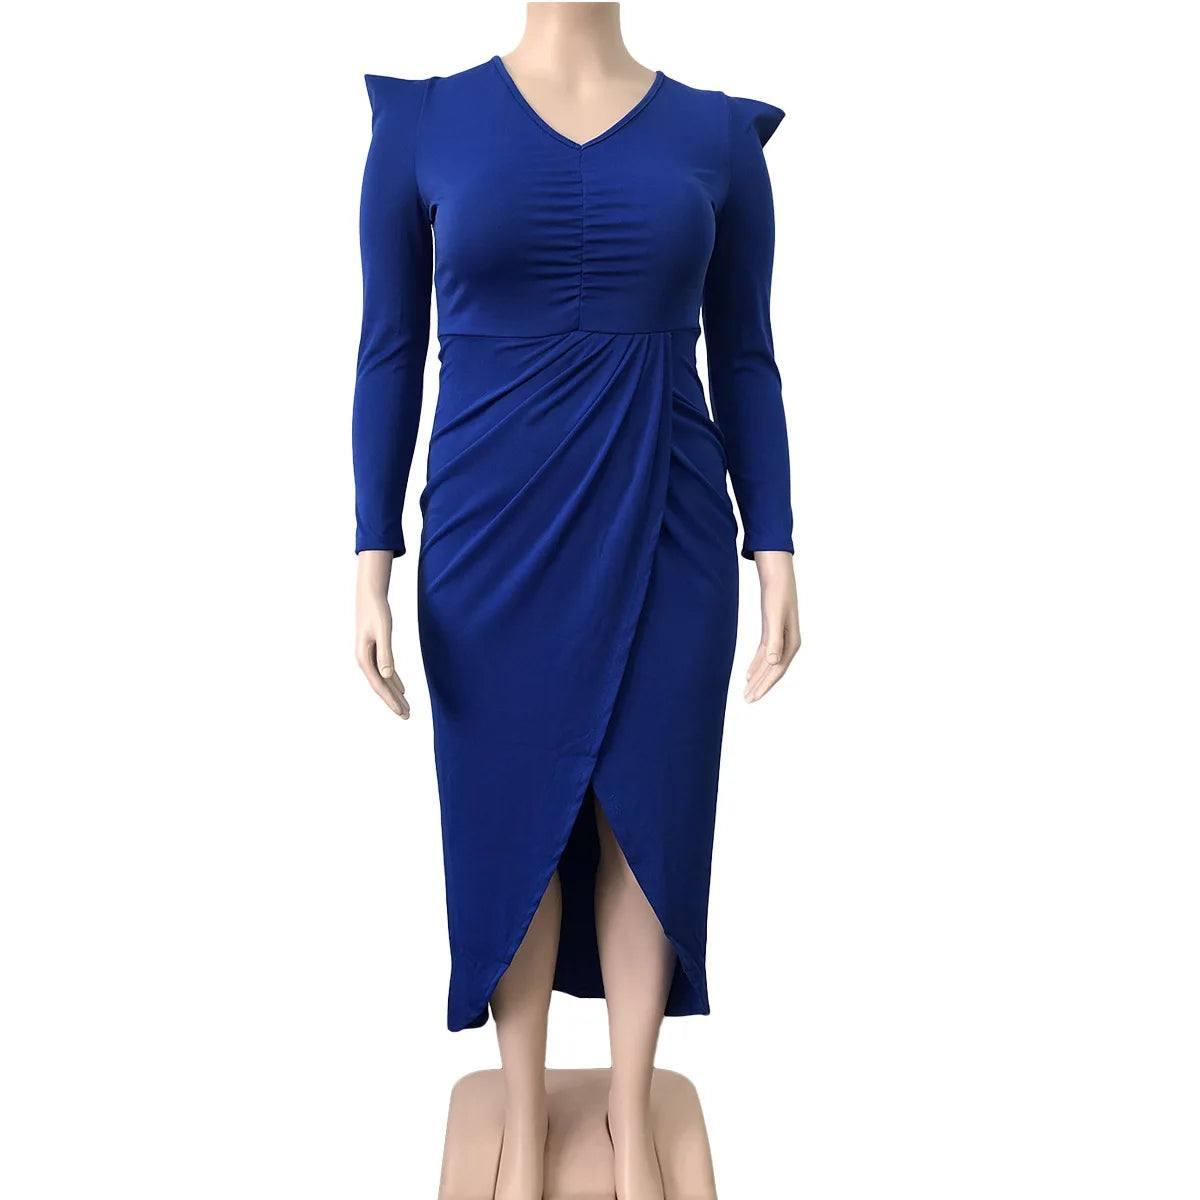 Elegant Plus-Size Blue Wrap Dress Styles-6